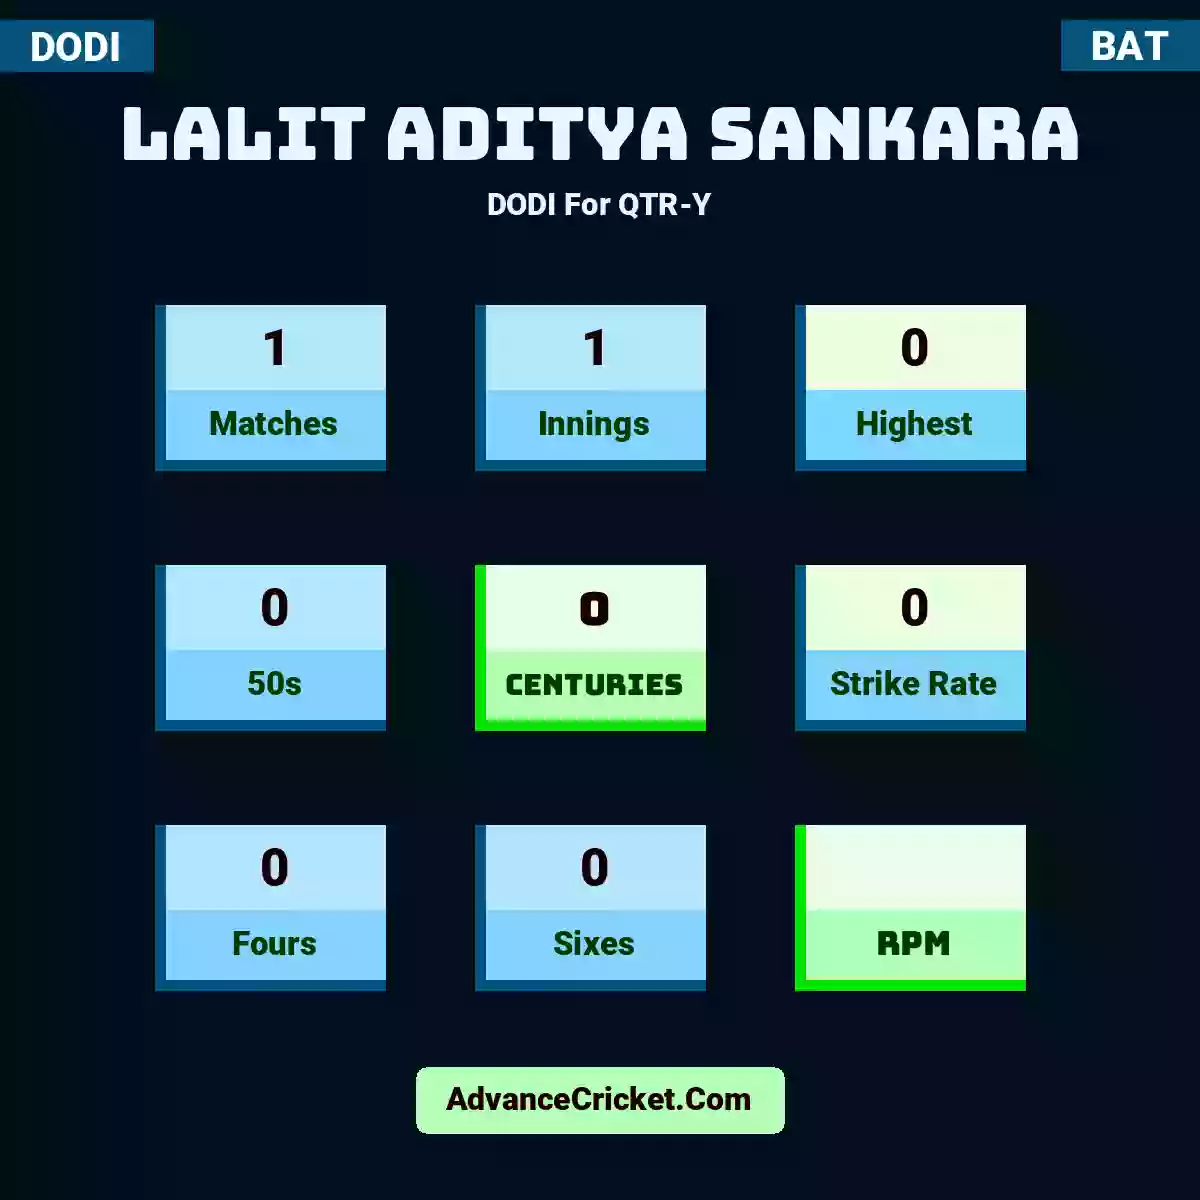 Lalit Aditya Sankara DODI  For QTR-Y, Lalit Aditya Sankara played 1 matches, scored 0 runs as highest, 0 half-centuries, and 0 centuries, with a strike rate of 0. L.Aditya.Sankara hit 0 fours and 0 sixes.